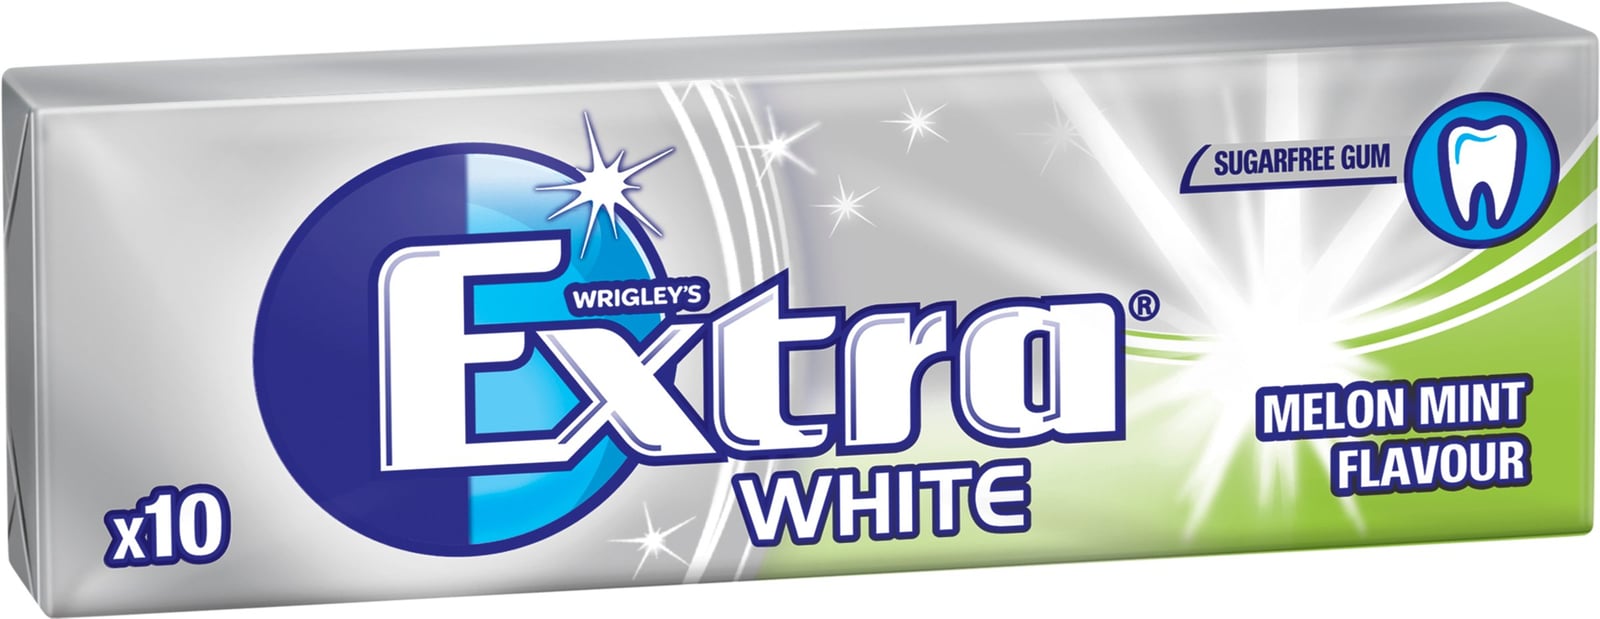 EXTRA White Melon Mint 14 g